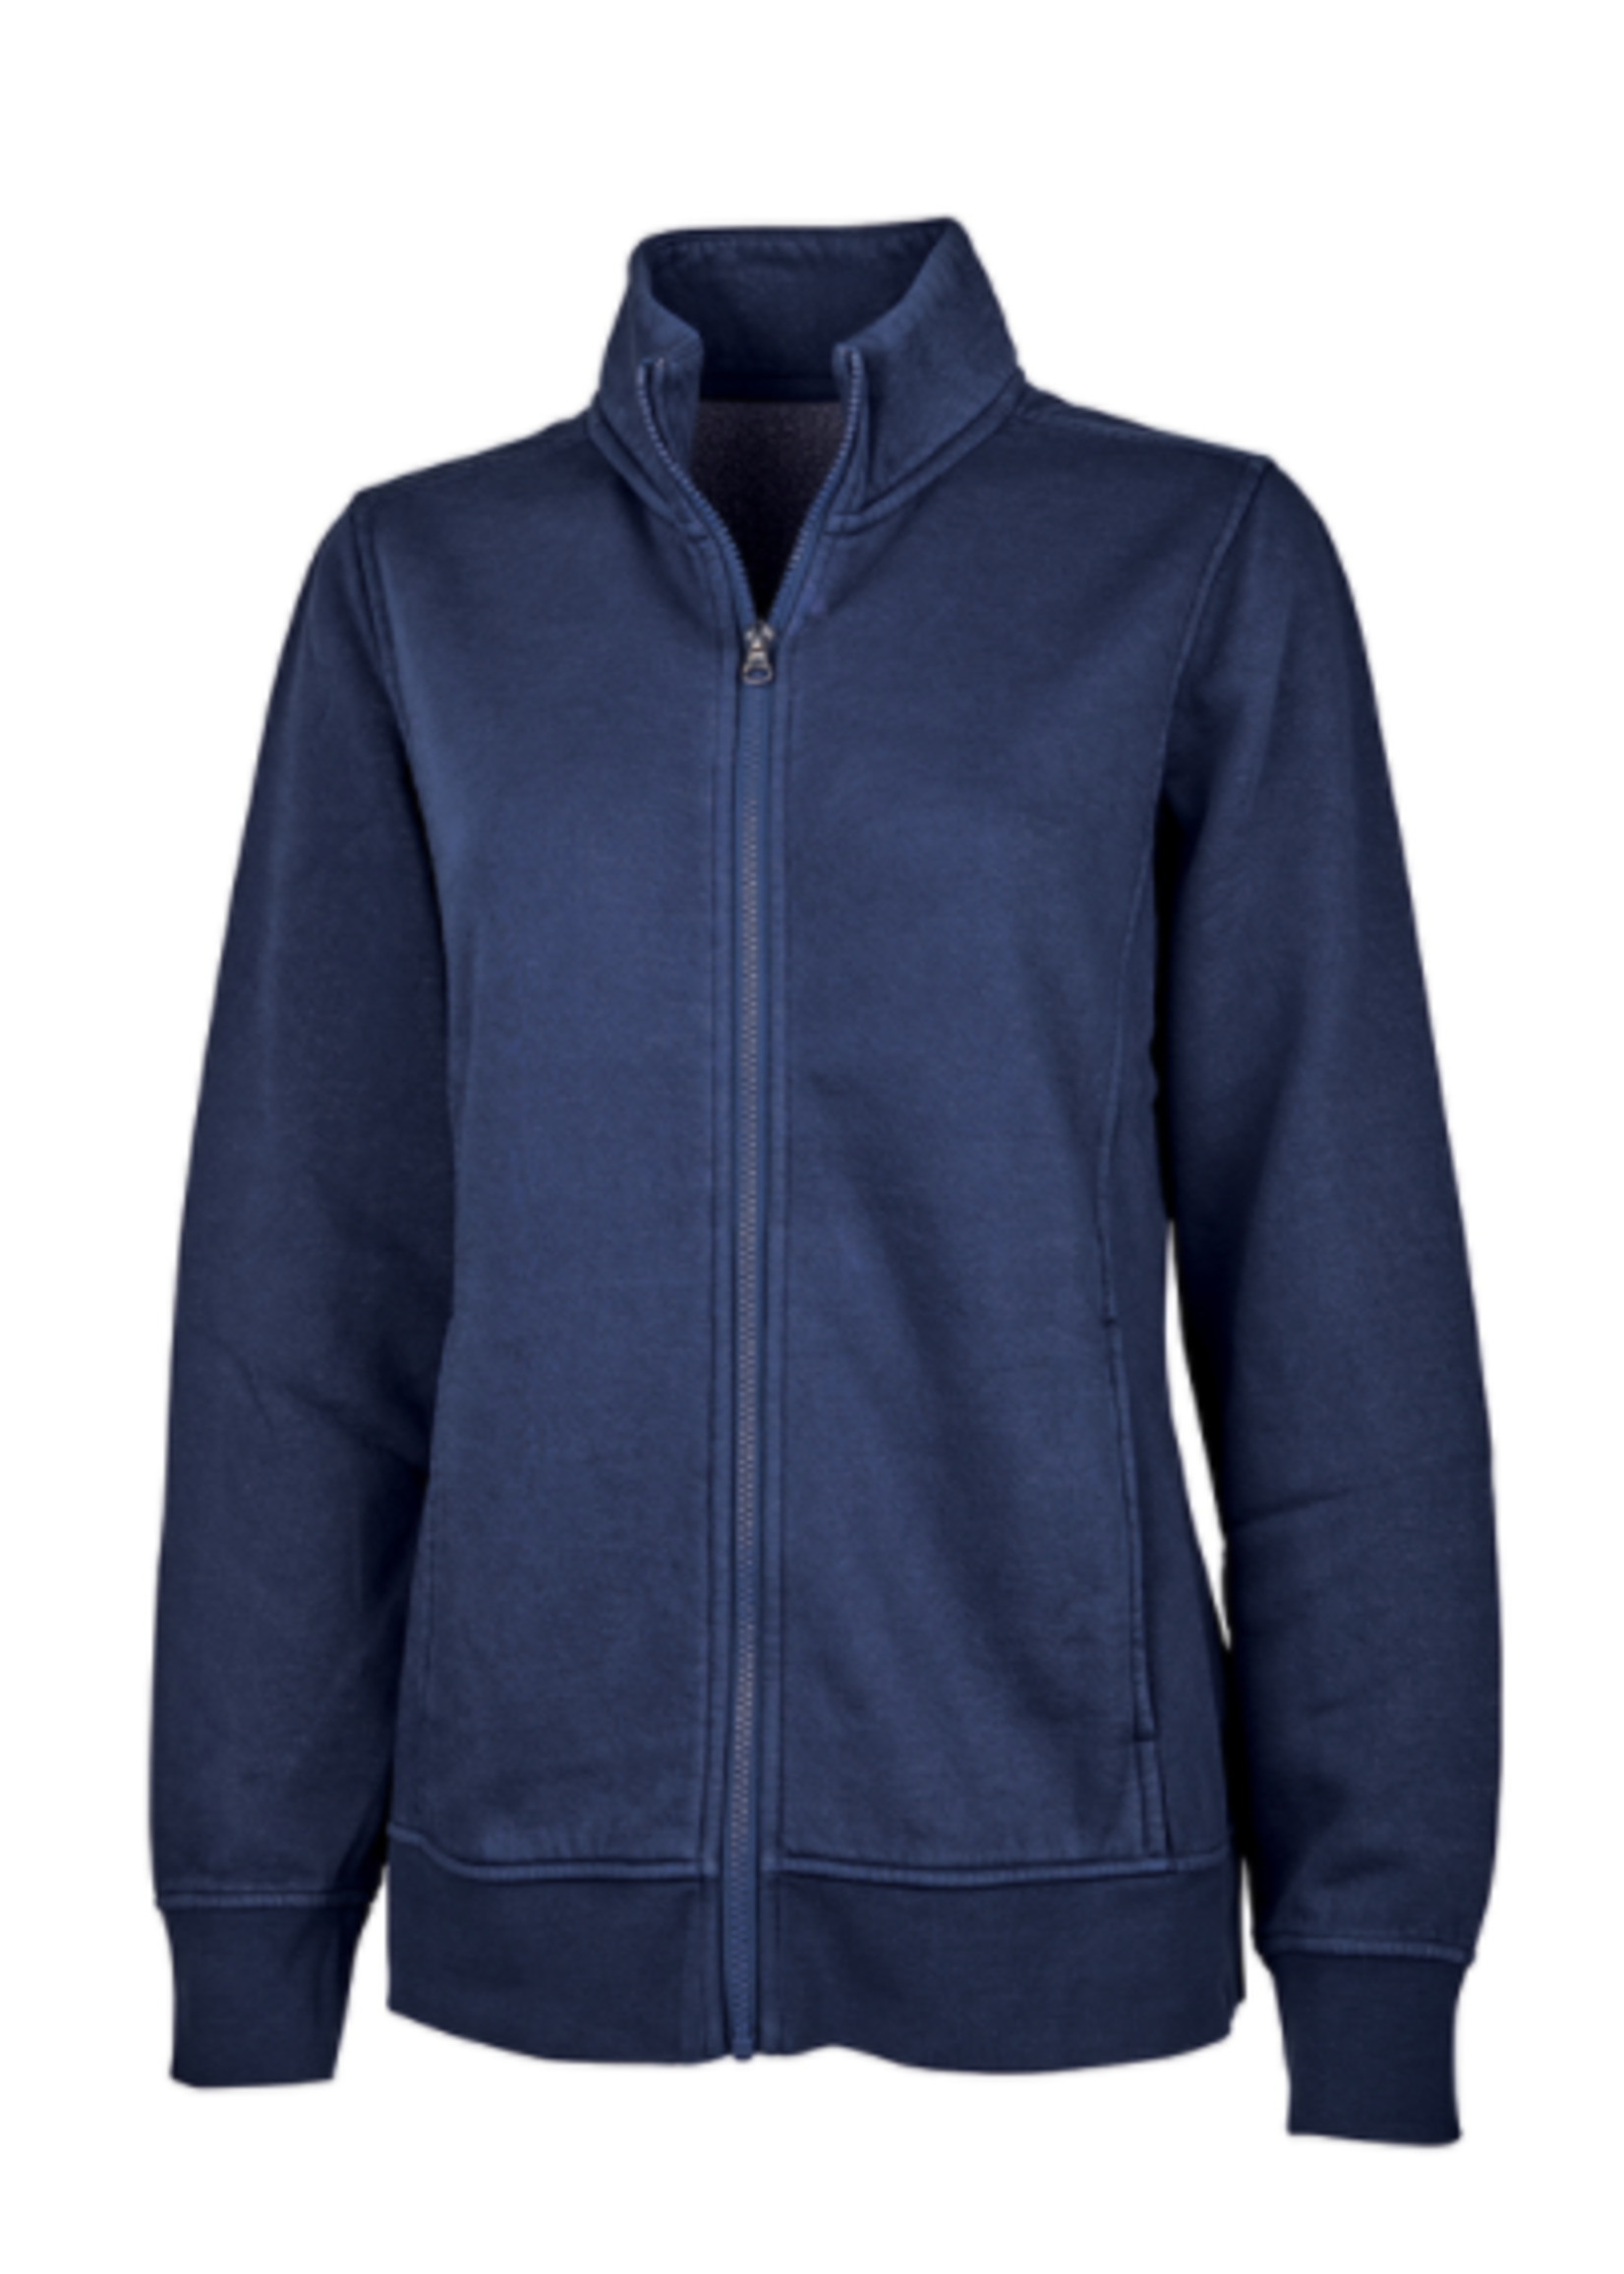 NON-UNIFORM Women's Clifton Full Zip Sweatshirt, Custom Order